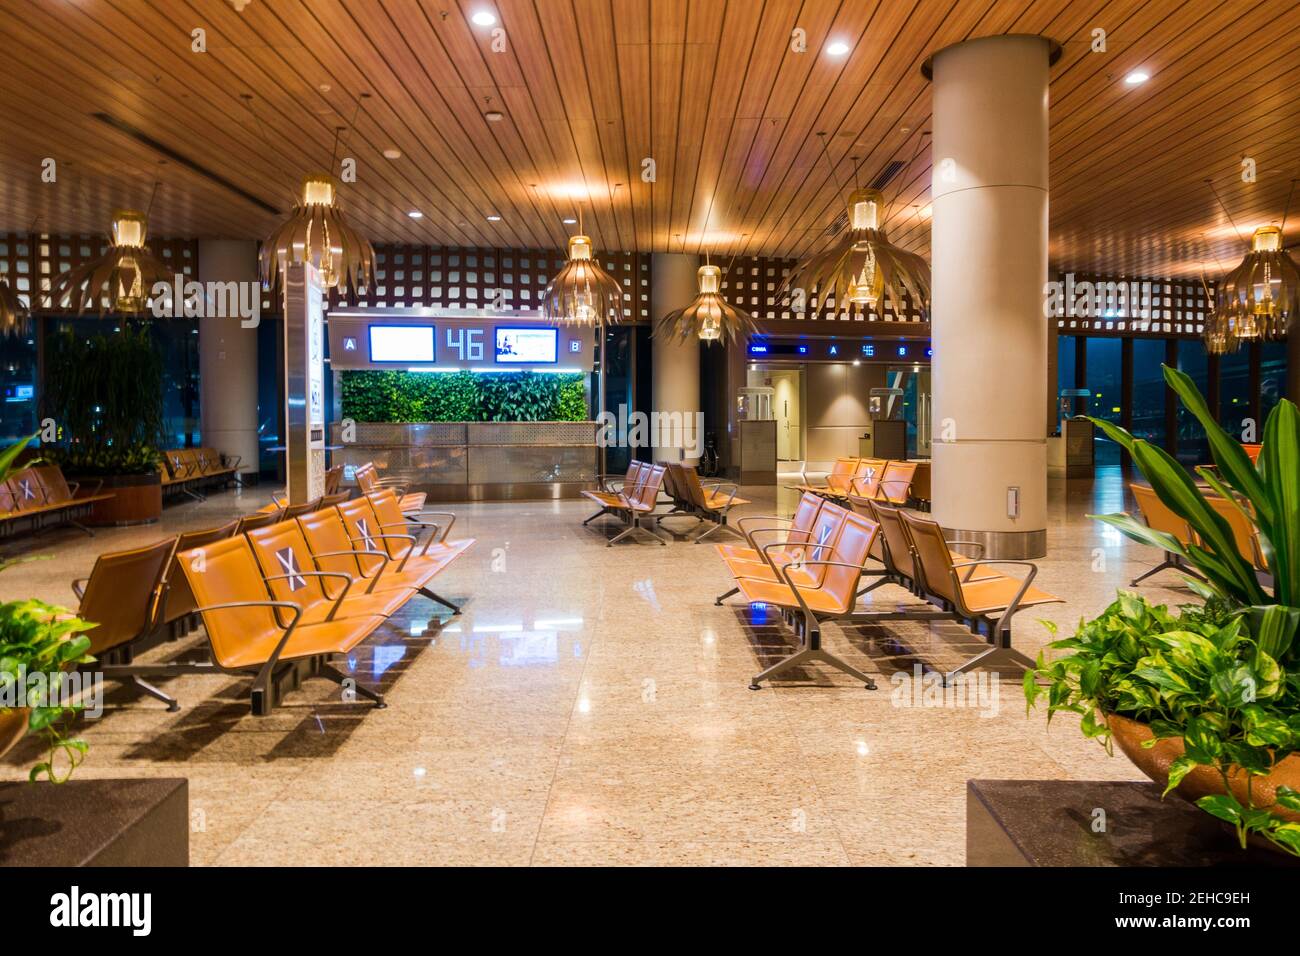 Mumbai airport boarding gate Stock Photo